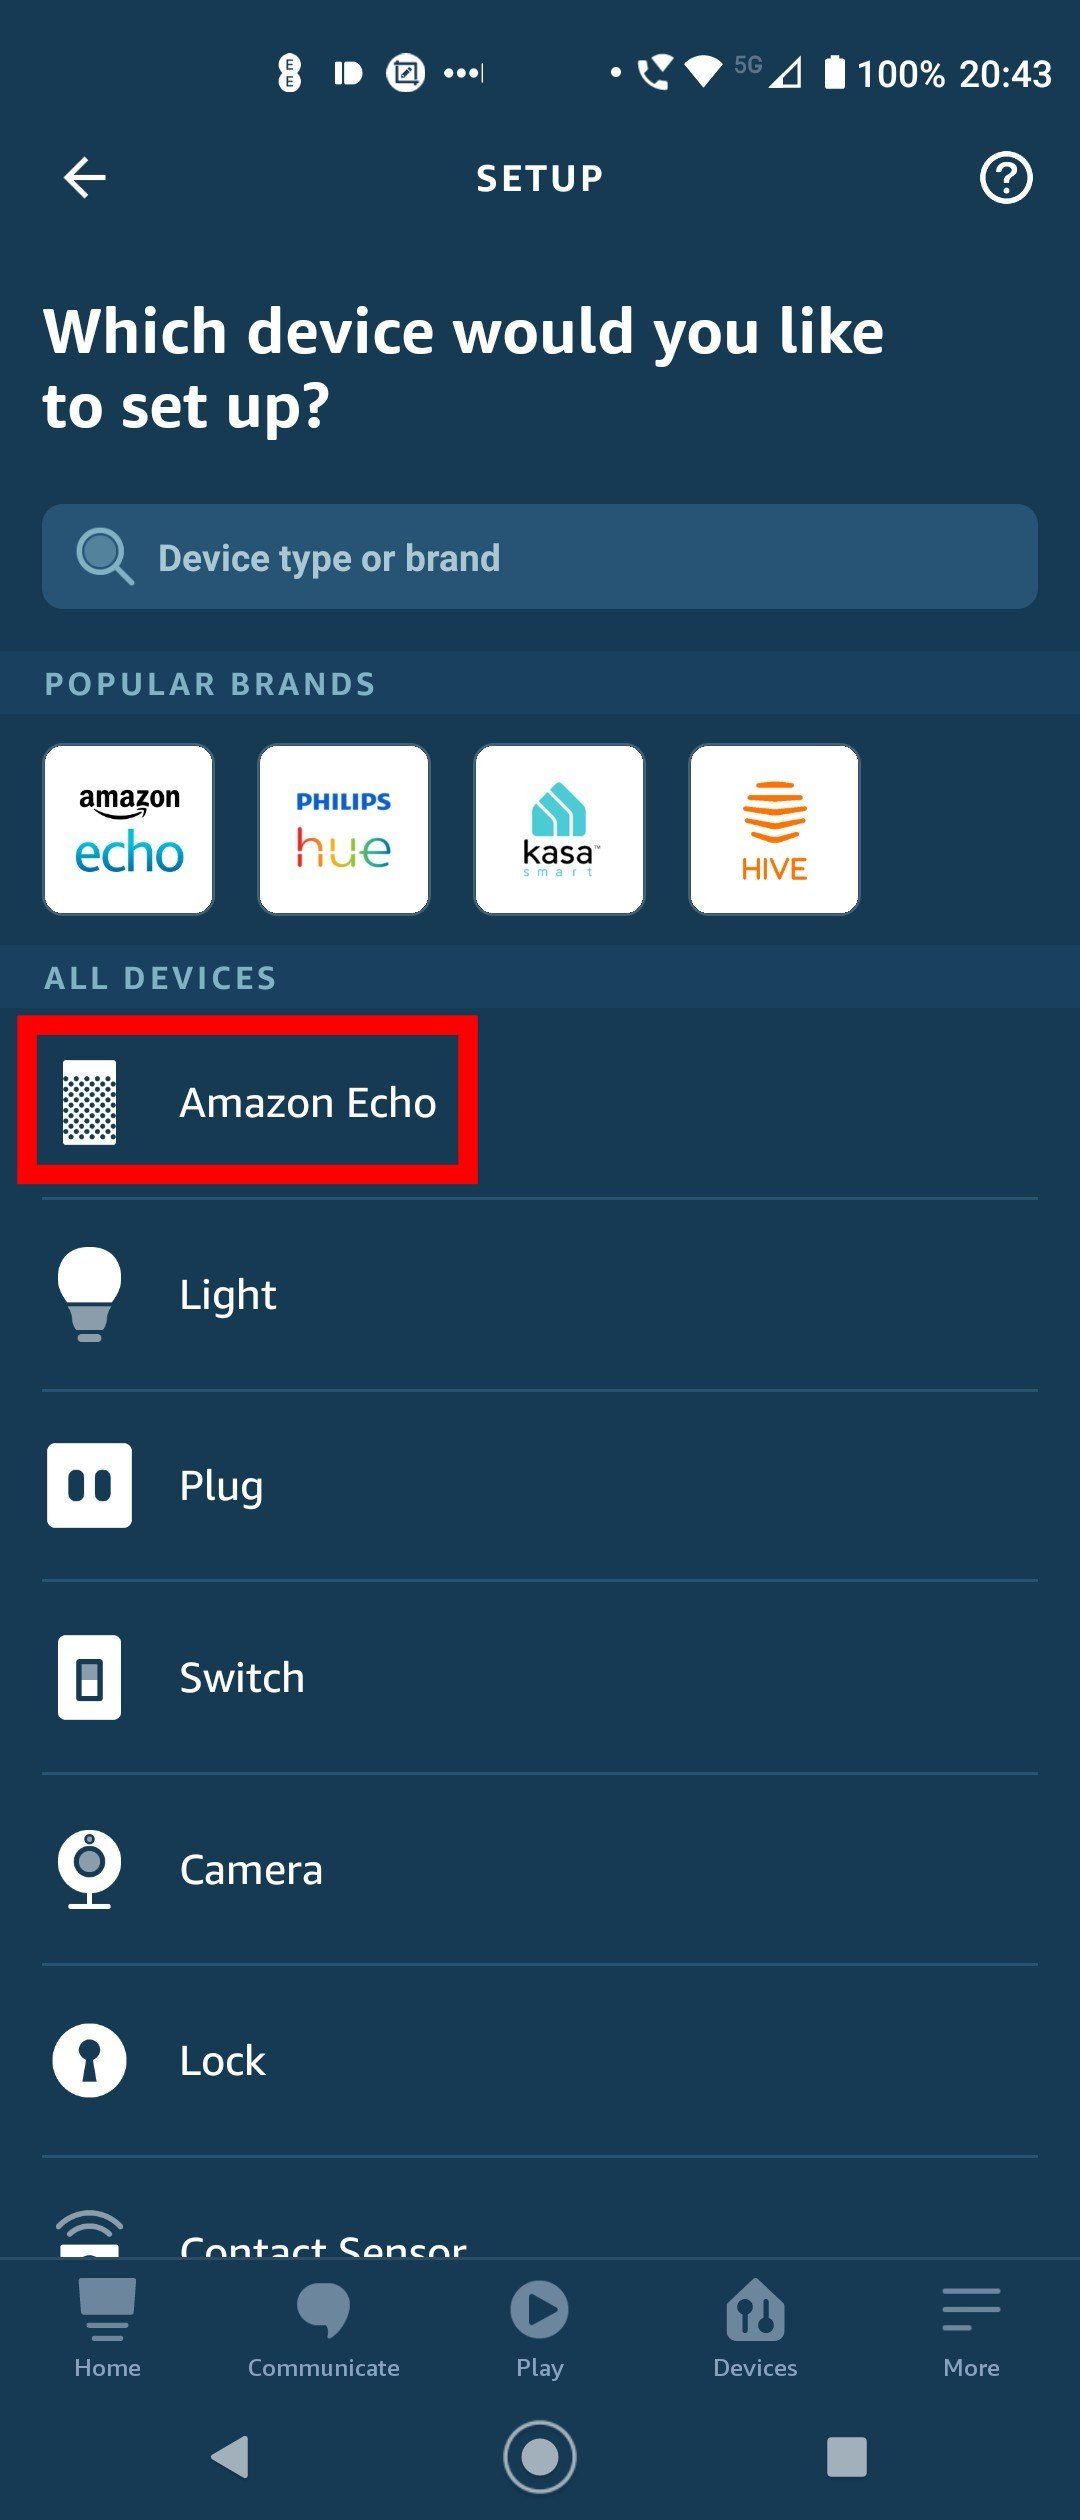 Adding an Amazon Echo